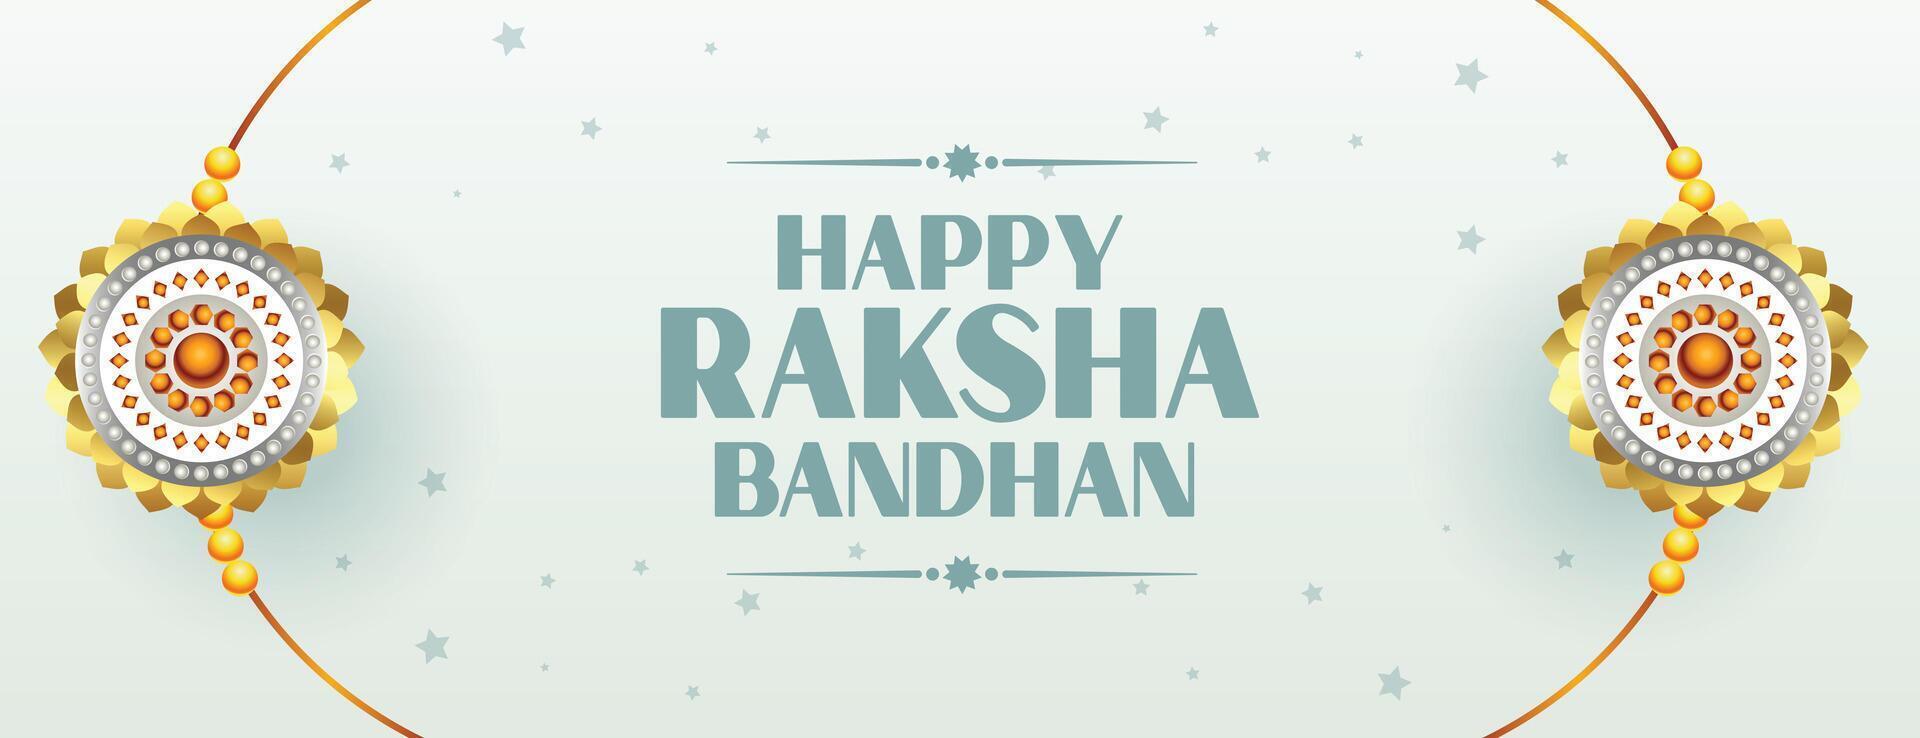 schön Raksha Bandhan traditionell Banner Design vektor